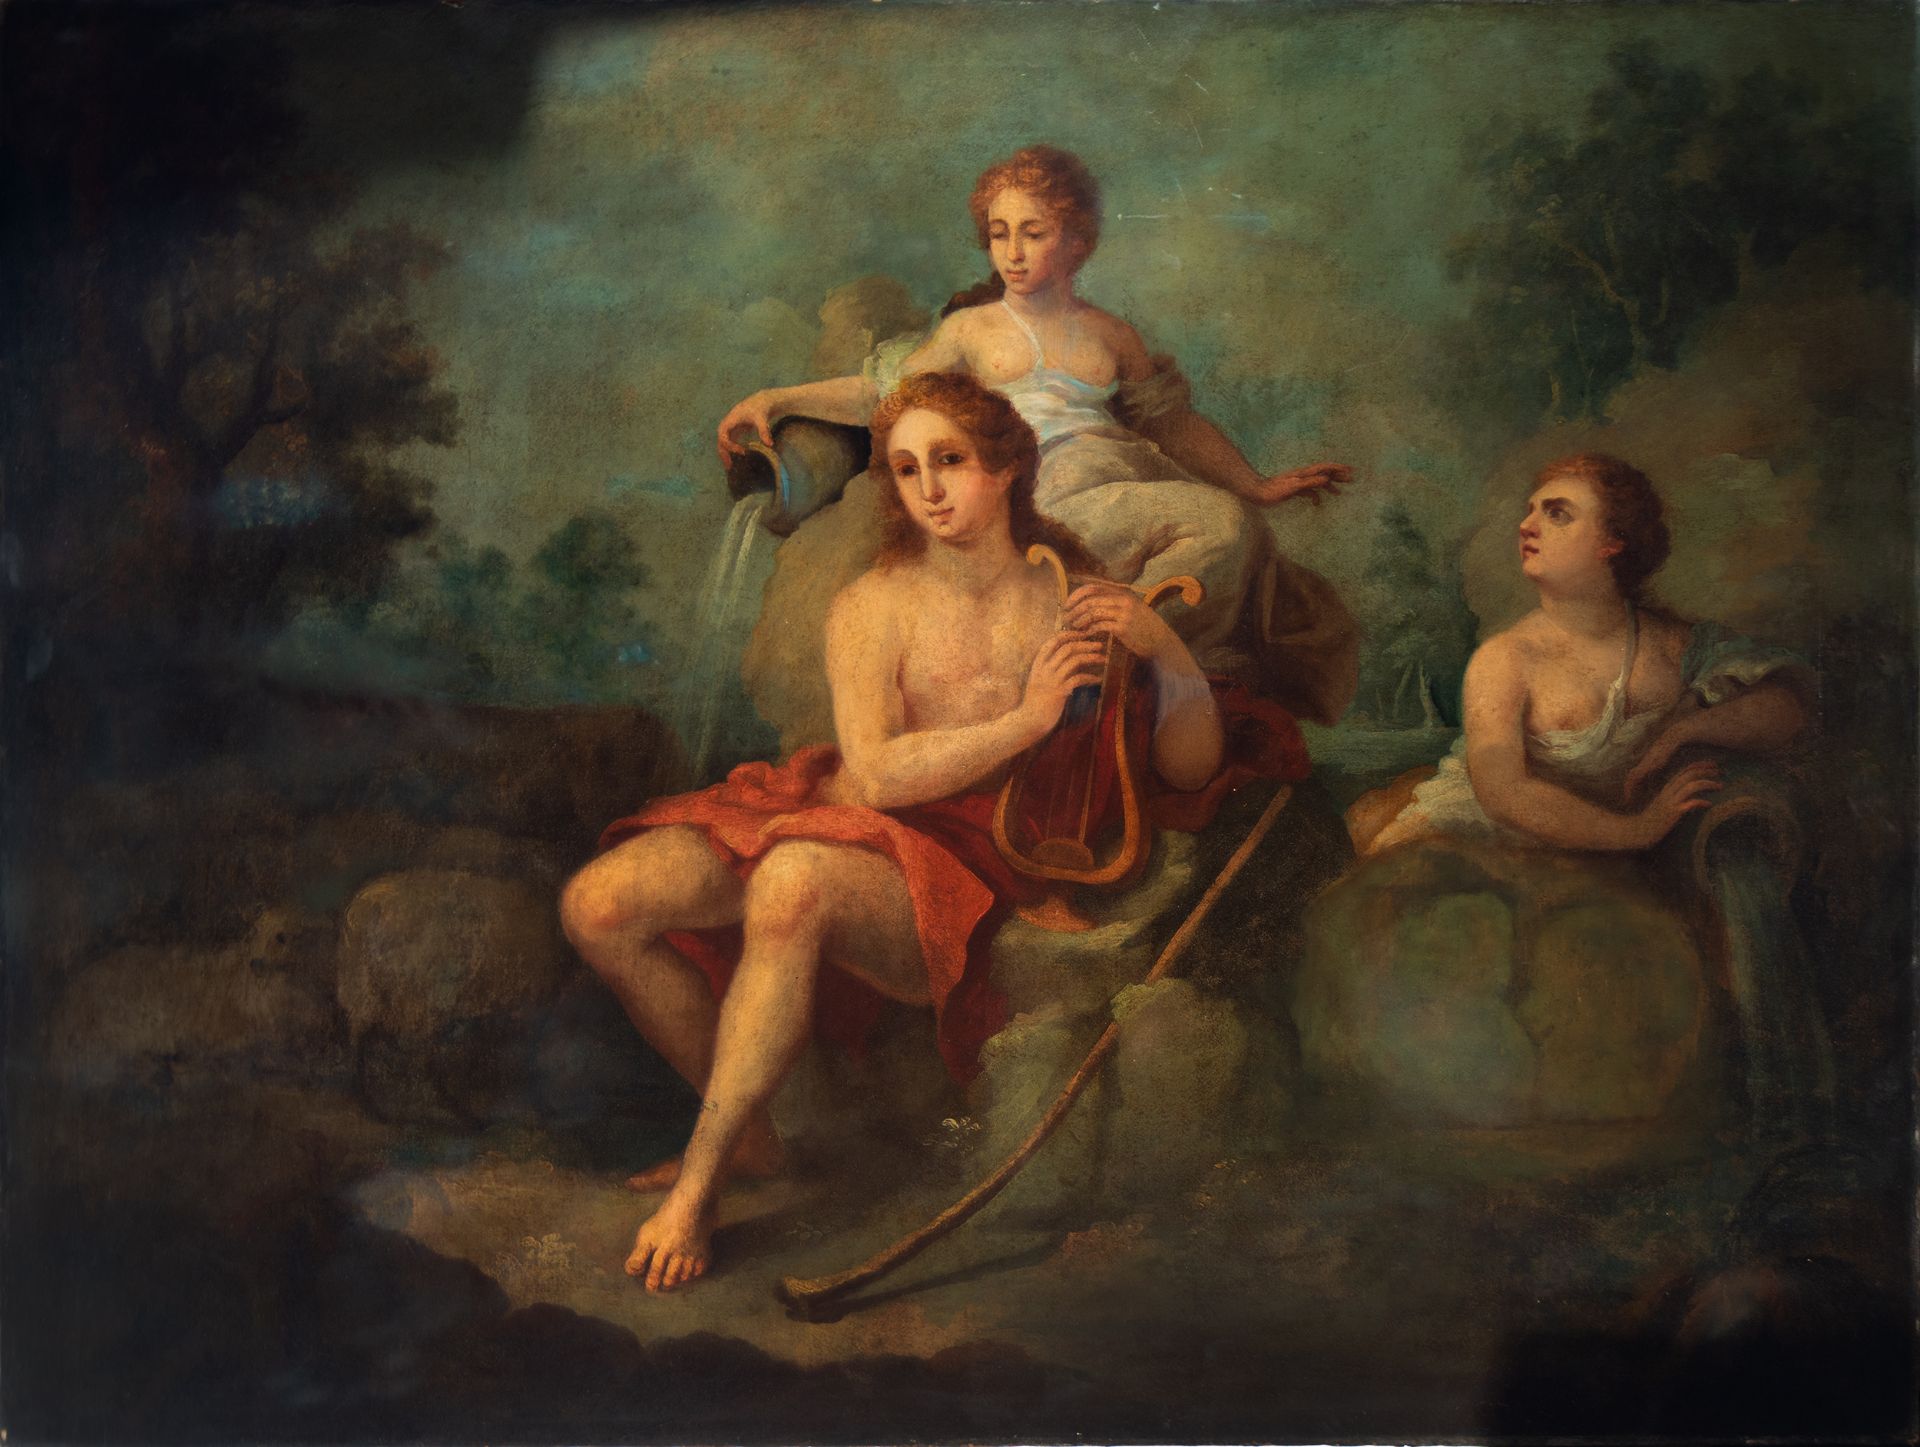 The Bath of Venus, Italian Neoclassicist school of the 18th century